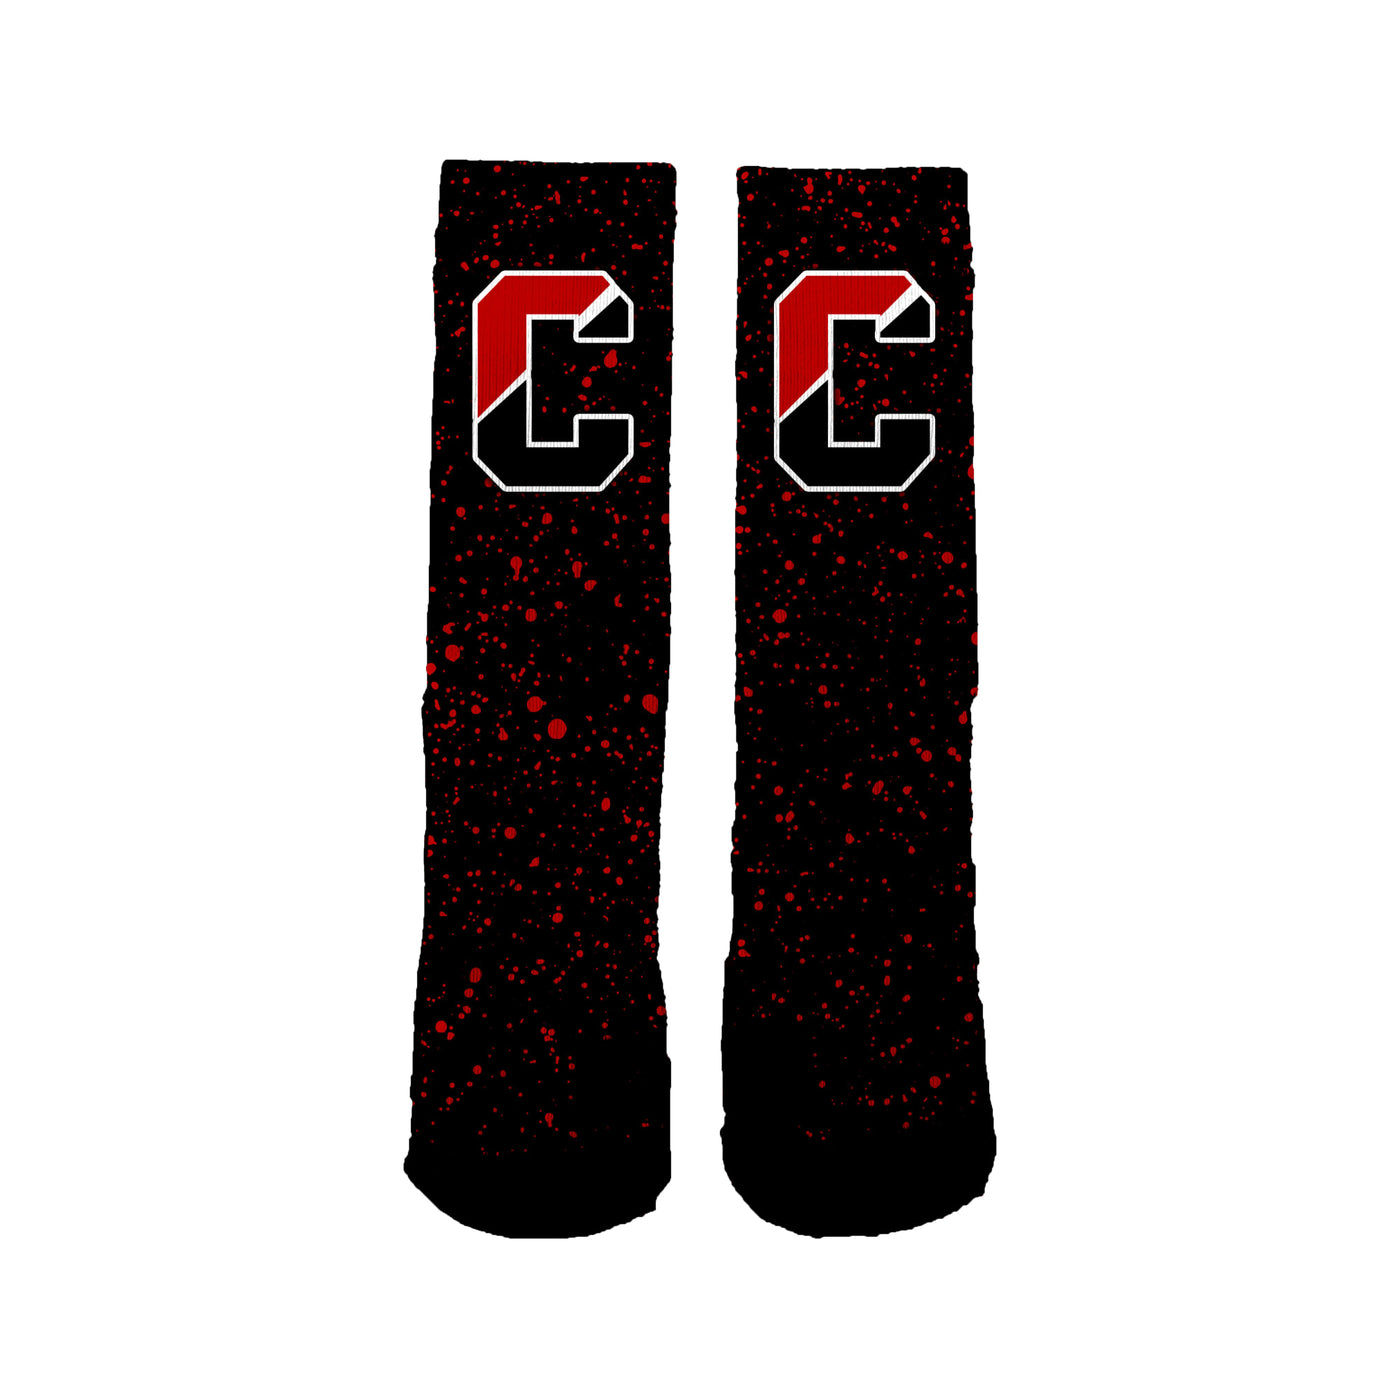 Cinnaminson Middle School Cement Socks